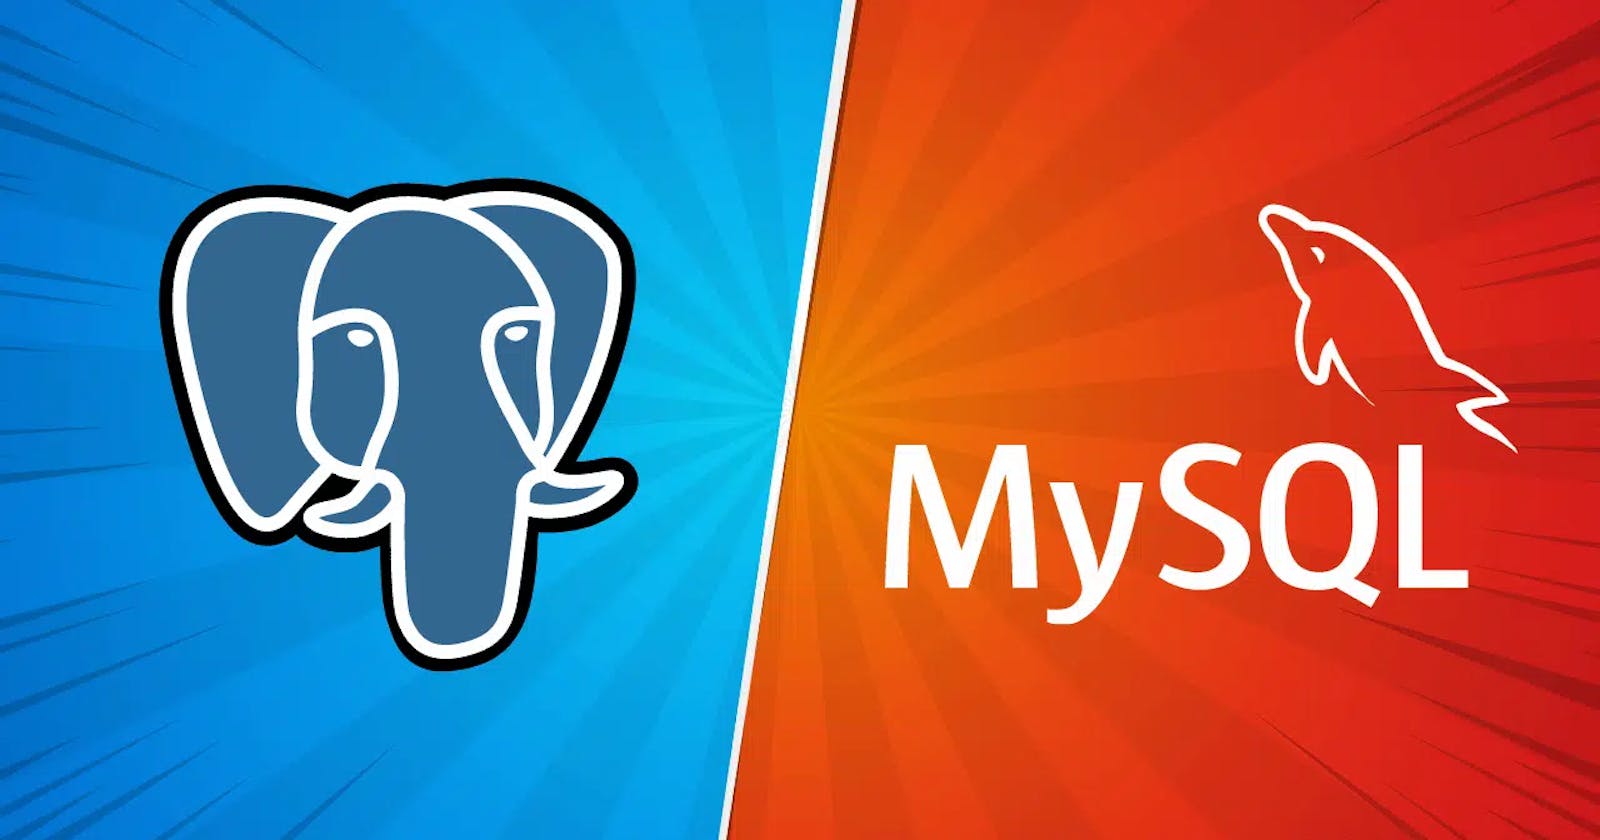 PostgreSQL or MySQL: What Should I Choose for My Full-Stack Project?